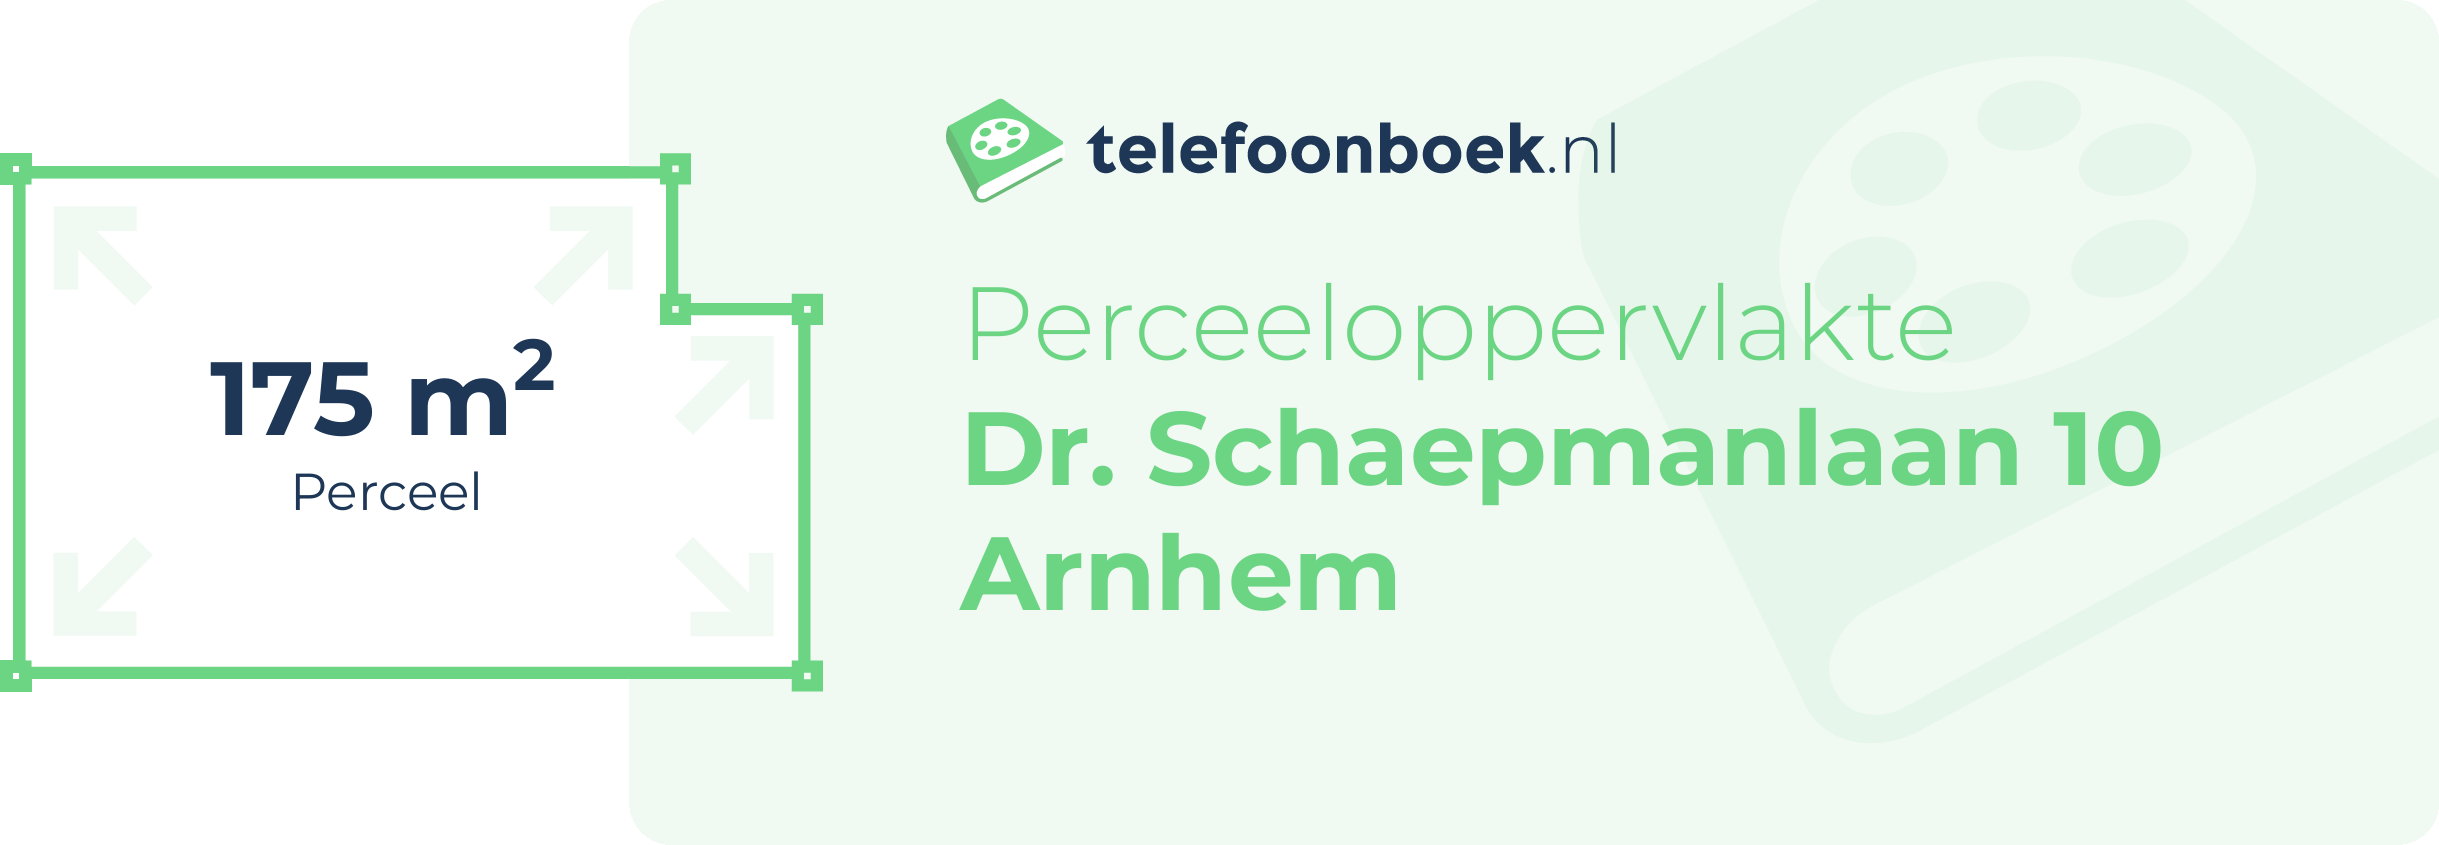 Perceeloppervlakte Dr. Schaepmanlaan 10 Arnhem